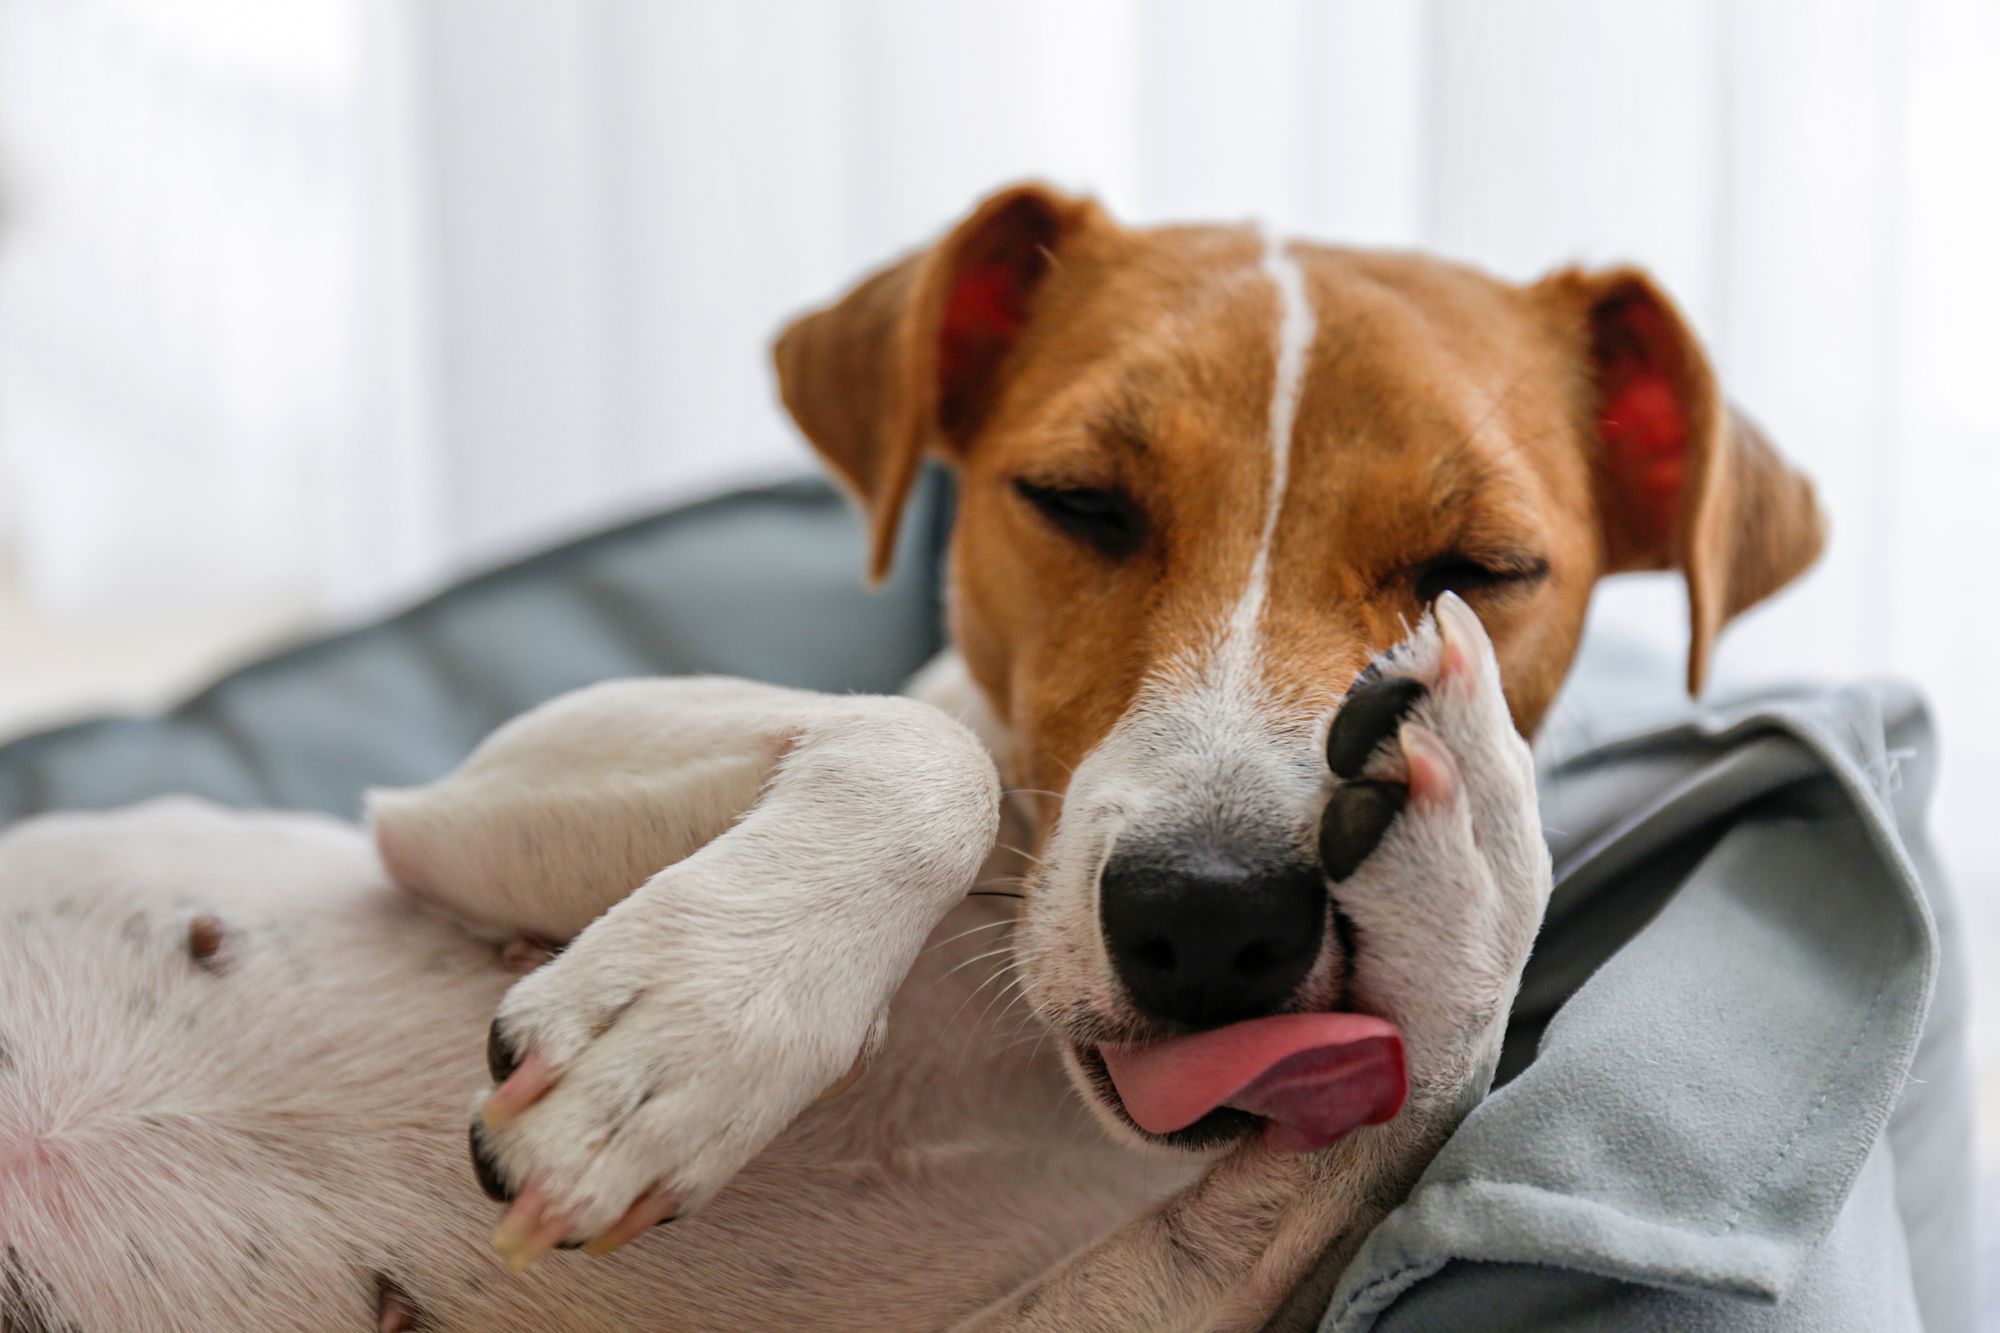 Puppy licking paw Image